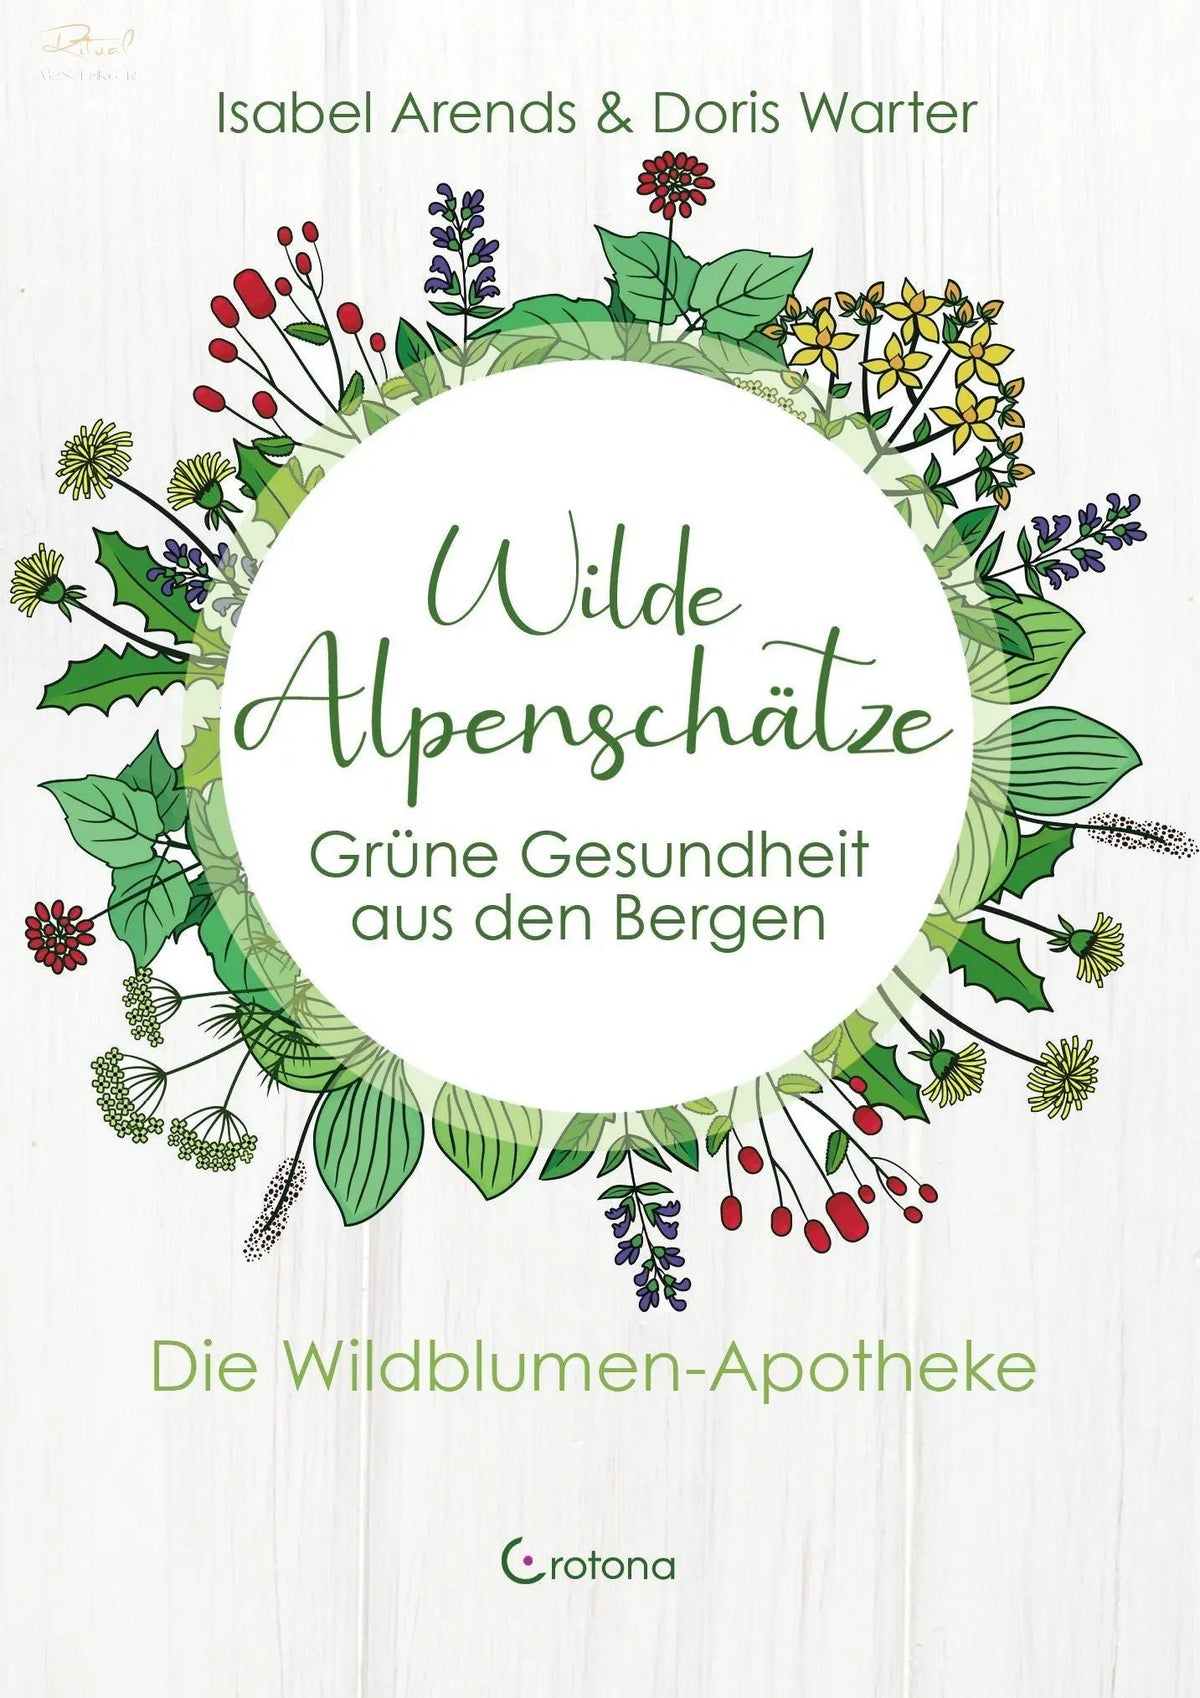 Wilde Alpenschätze von I. Arends & D. Warter - Ritualmanufaktur.de